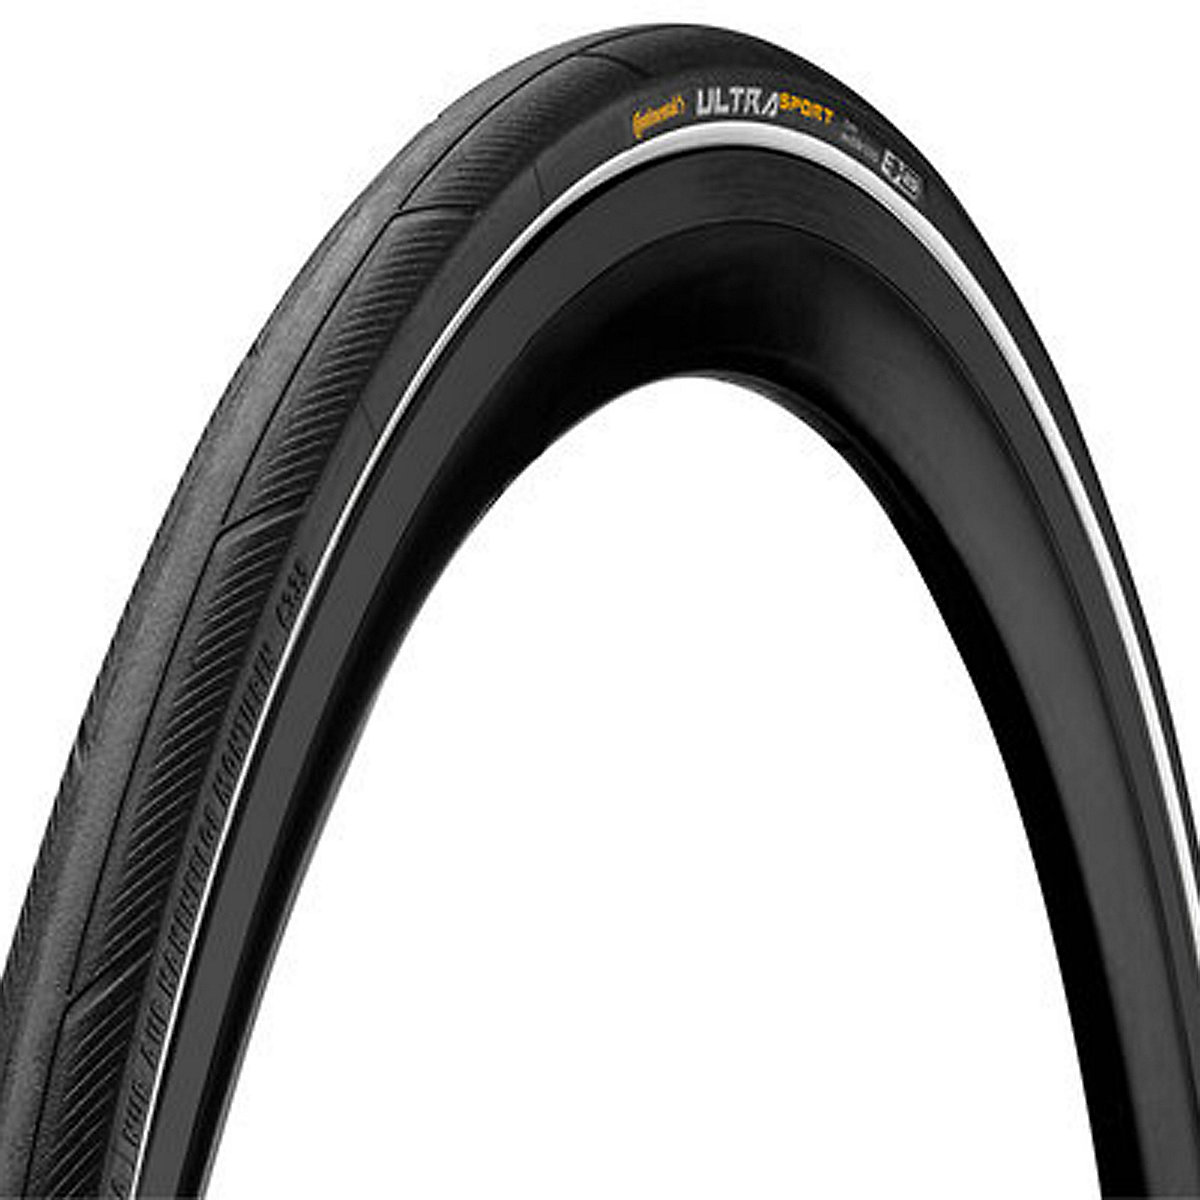 pneu pour vélo de route ultra sport iii 700 x 25c rigide